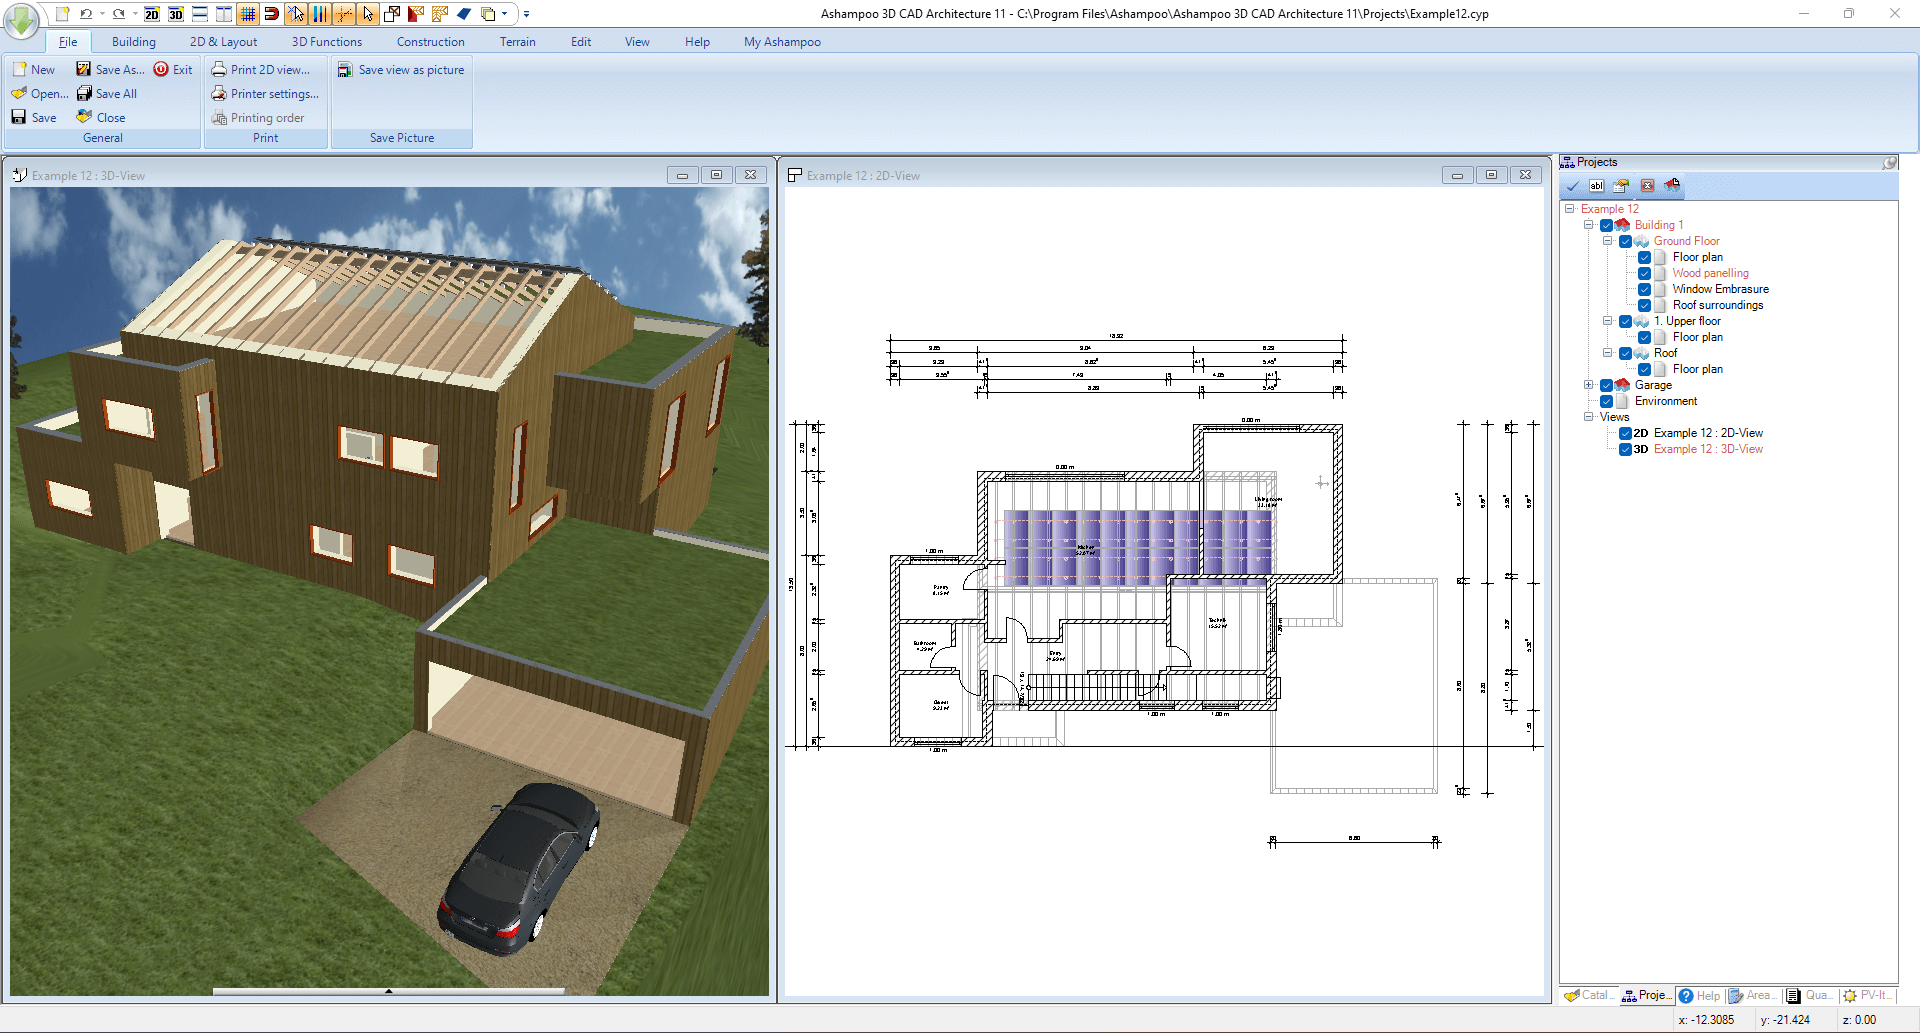 Ashampoo 3D CAD Architecture 11 - Wood 